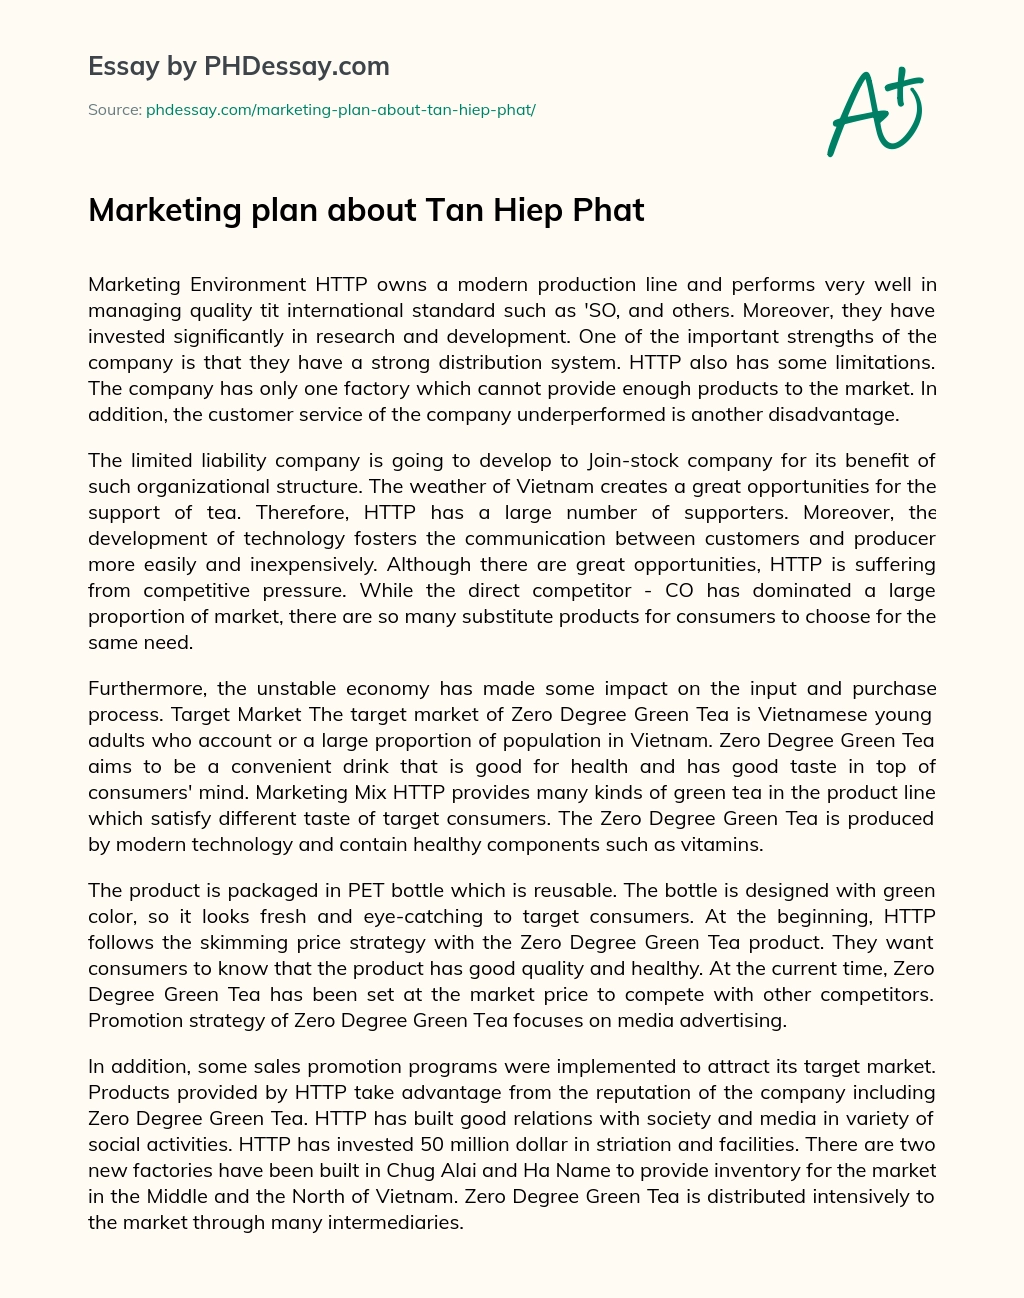 Marketing plan about Tan Hiep Phat essay